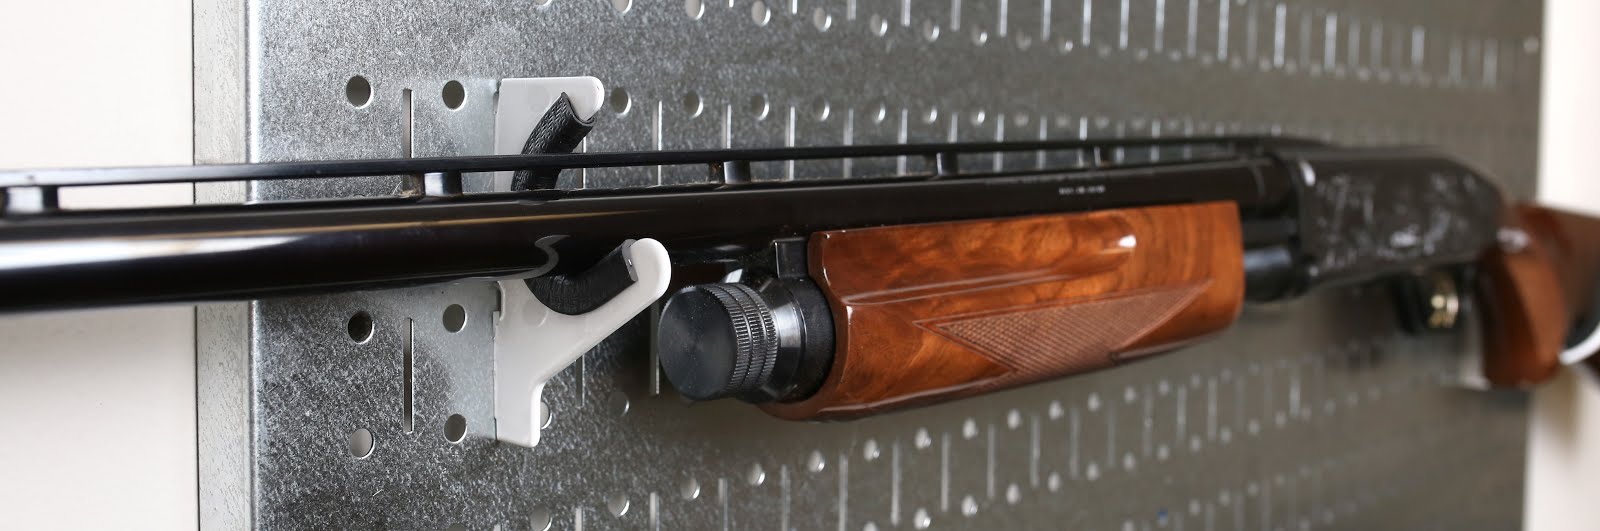 Wall Control Firearm And Gun Storage Guide